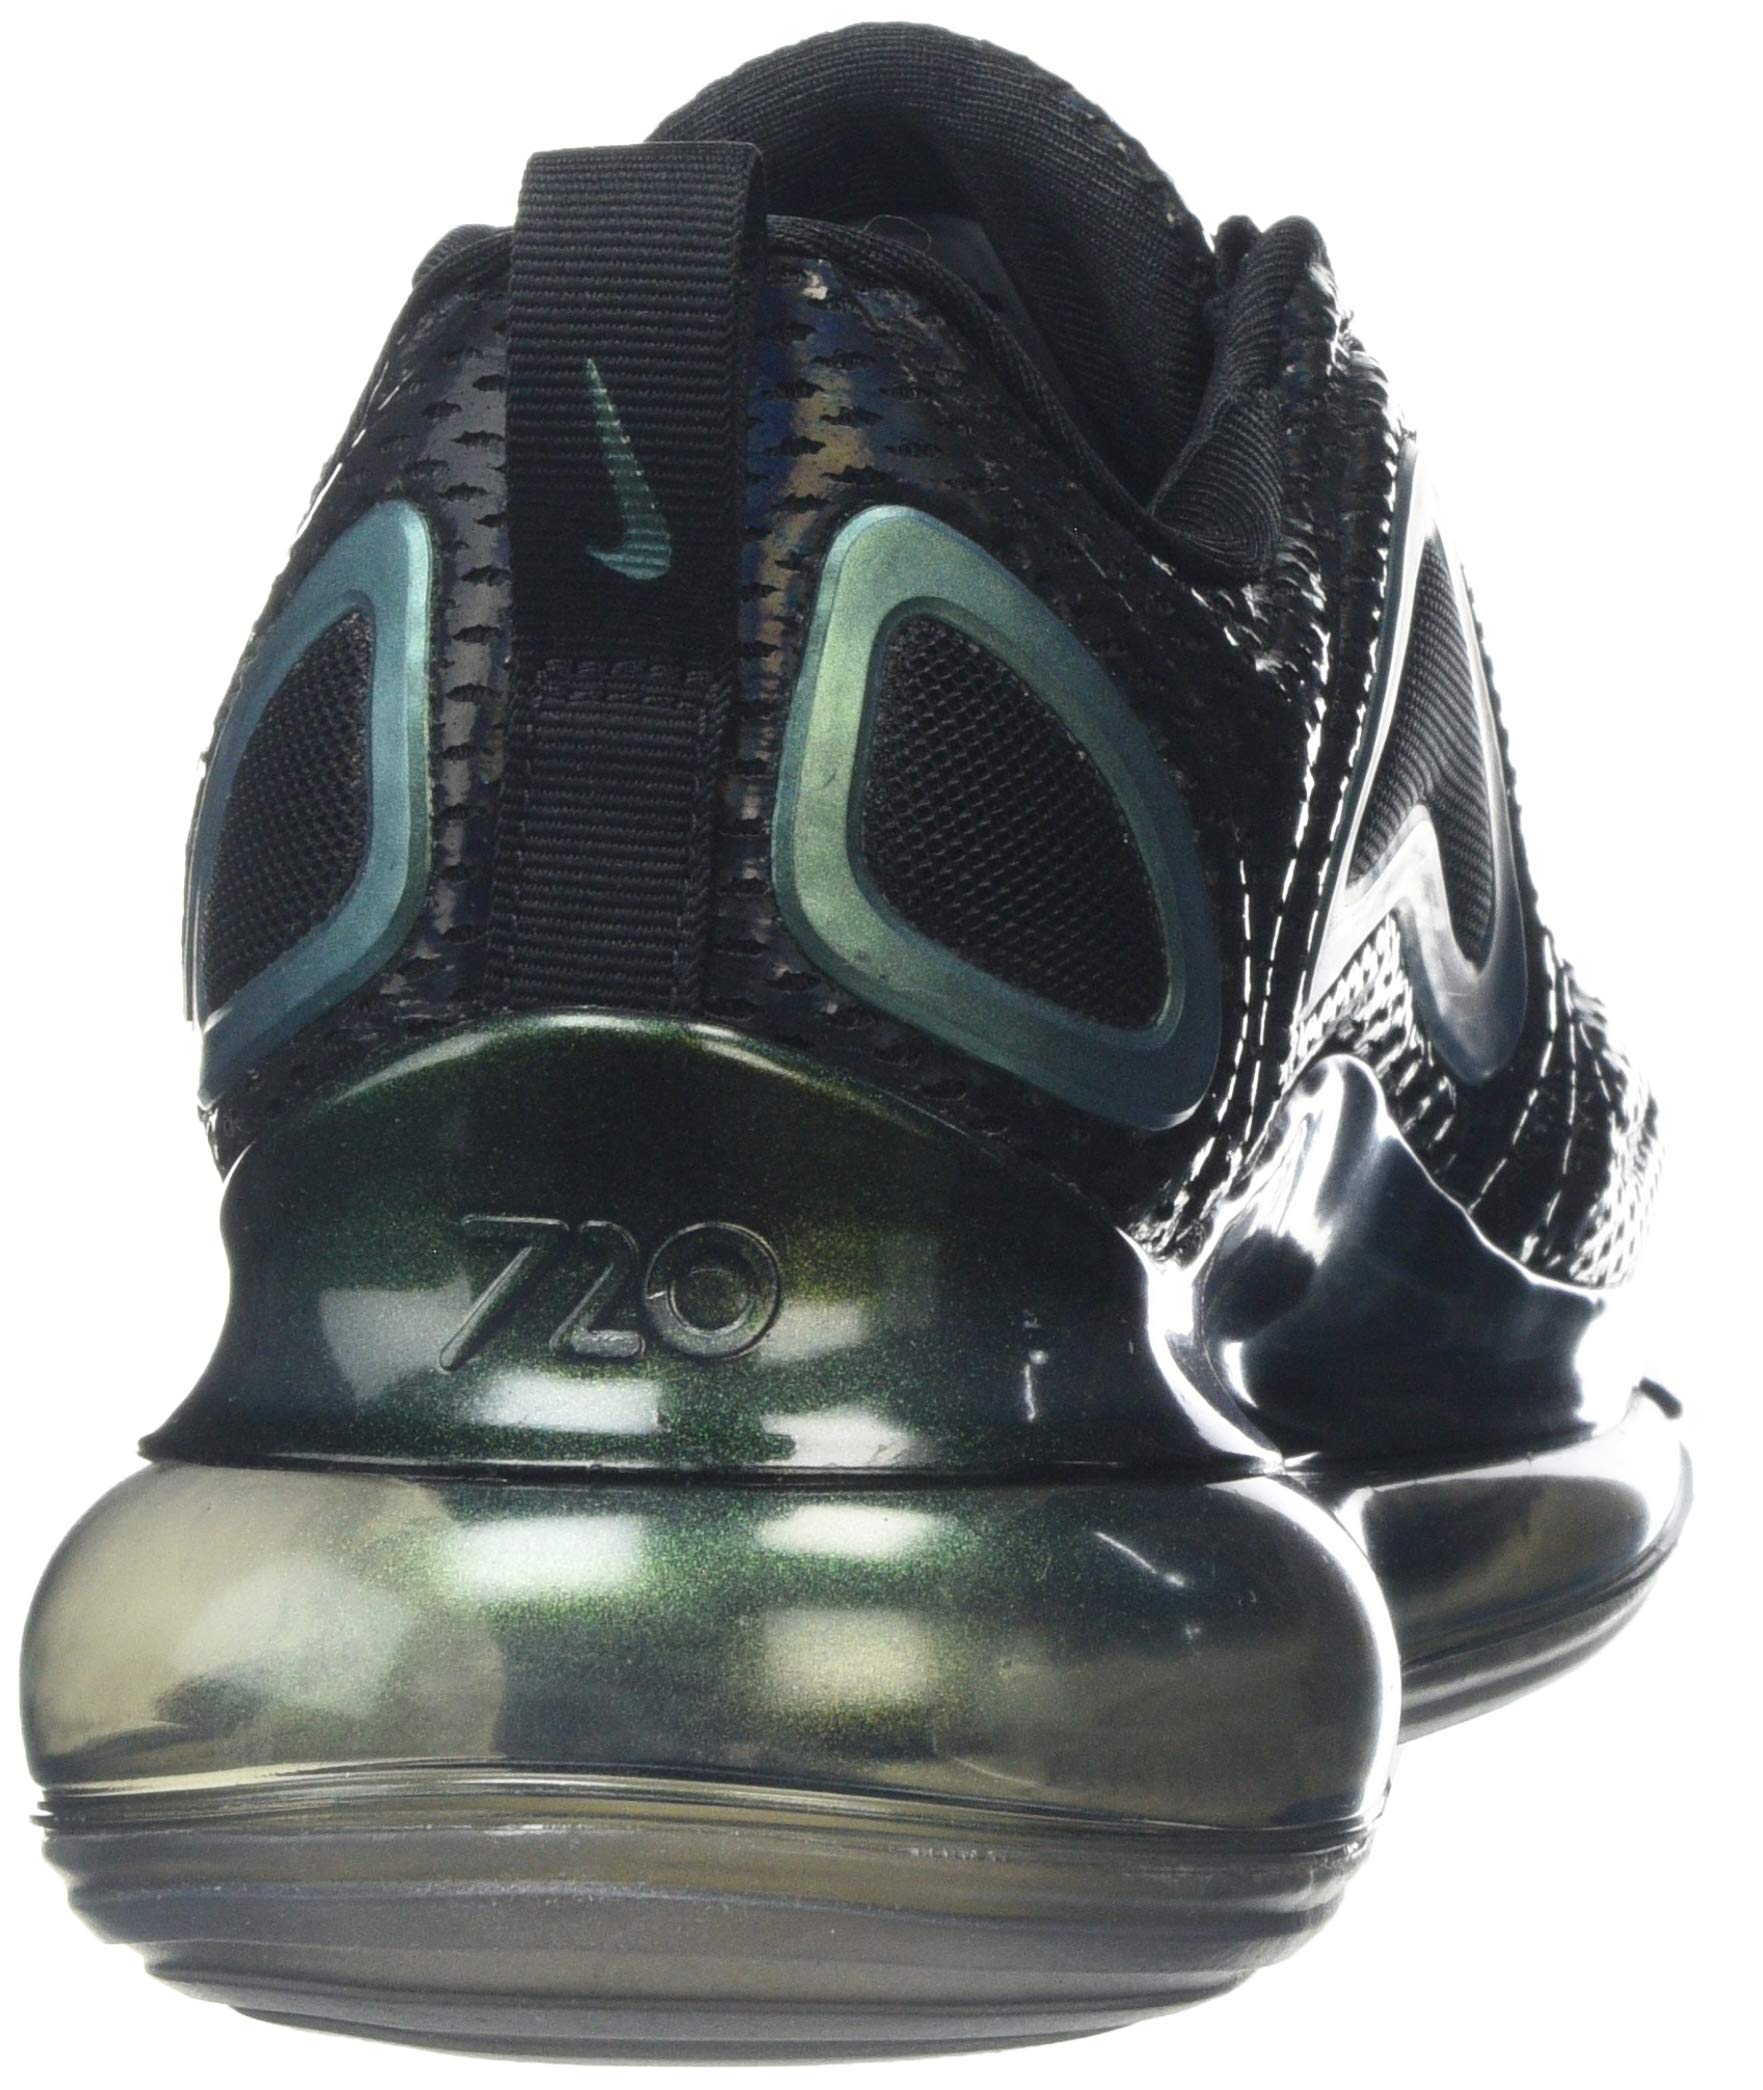 Mens Nike Air Max 720 Iridescent Mesh Black Metallic Green Laser Fuchs - image 2 of 7